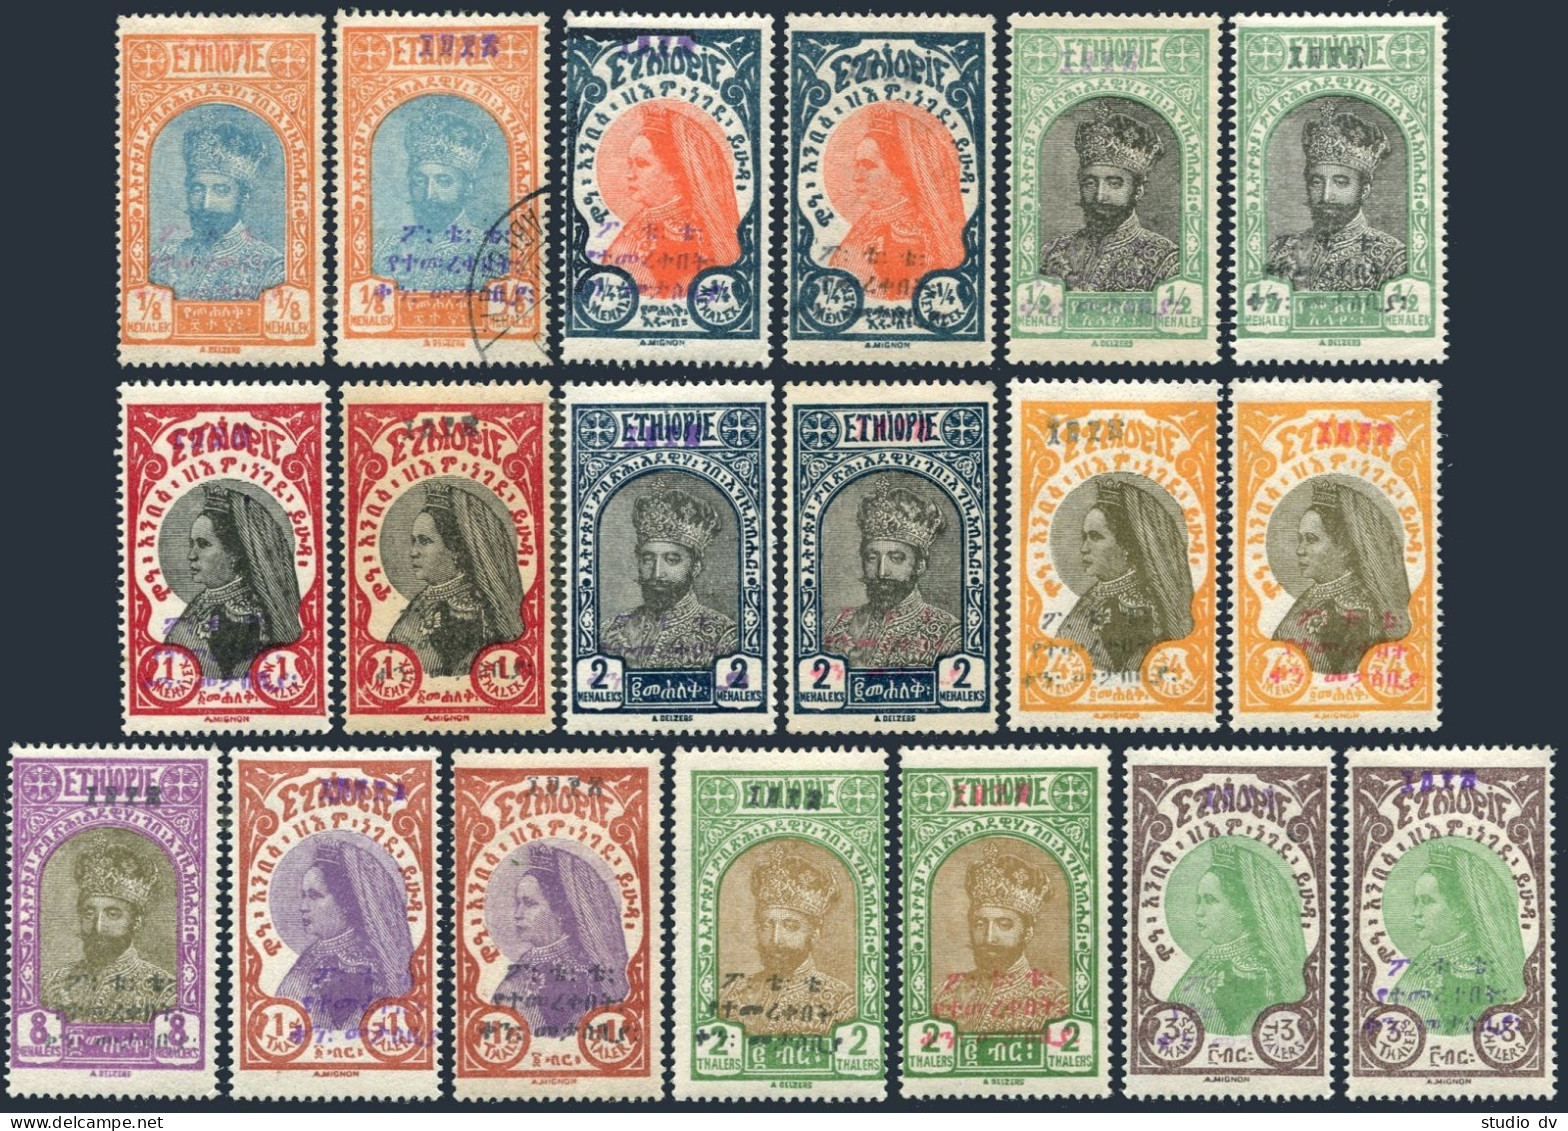 Ethiopia 165-174,19 Overprinted,MNH. Post Office-Addis Ababa,1928.Prince Tafari. - Ethiopië